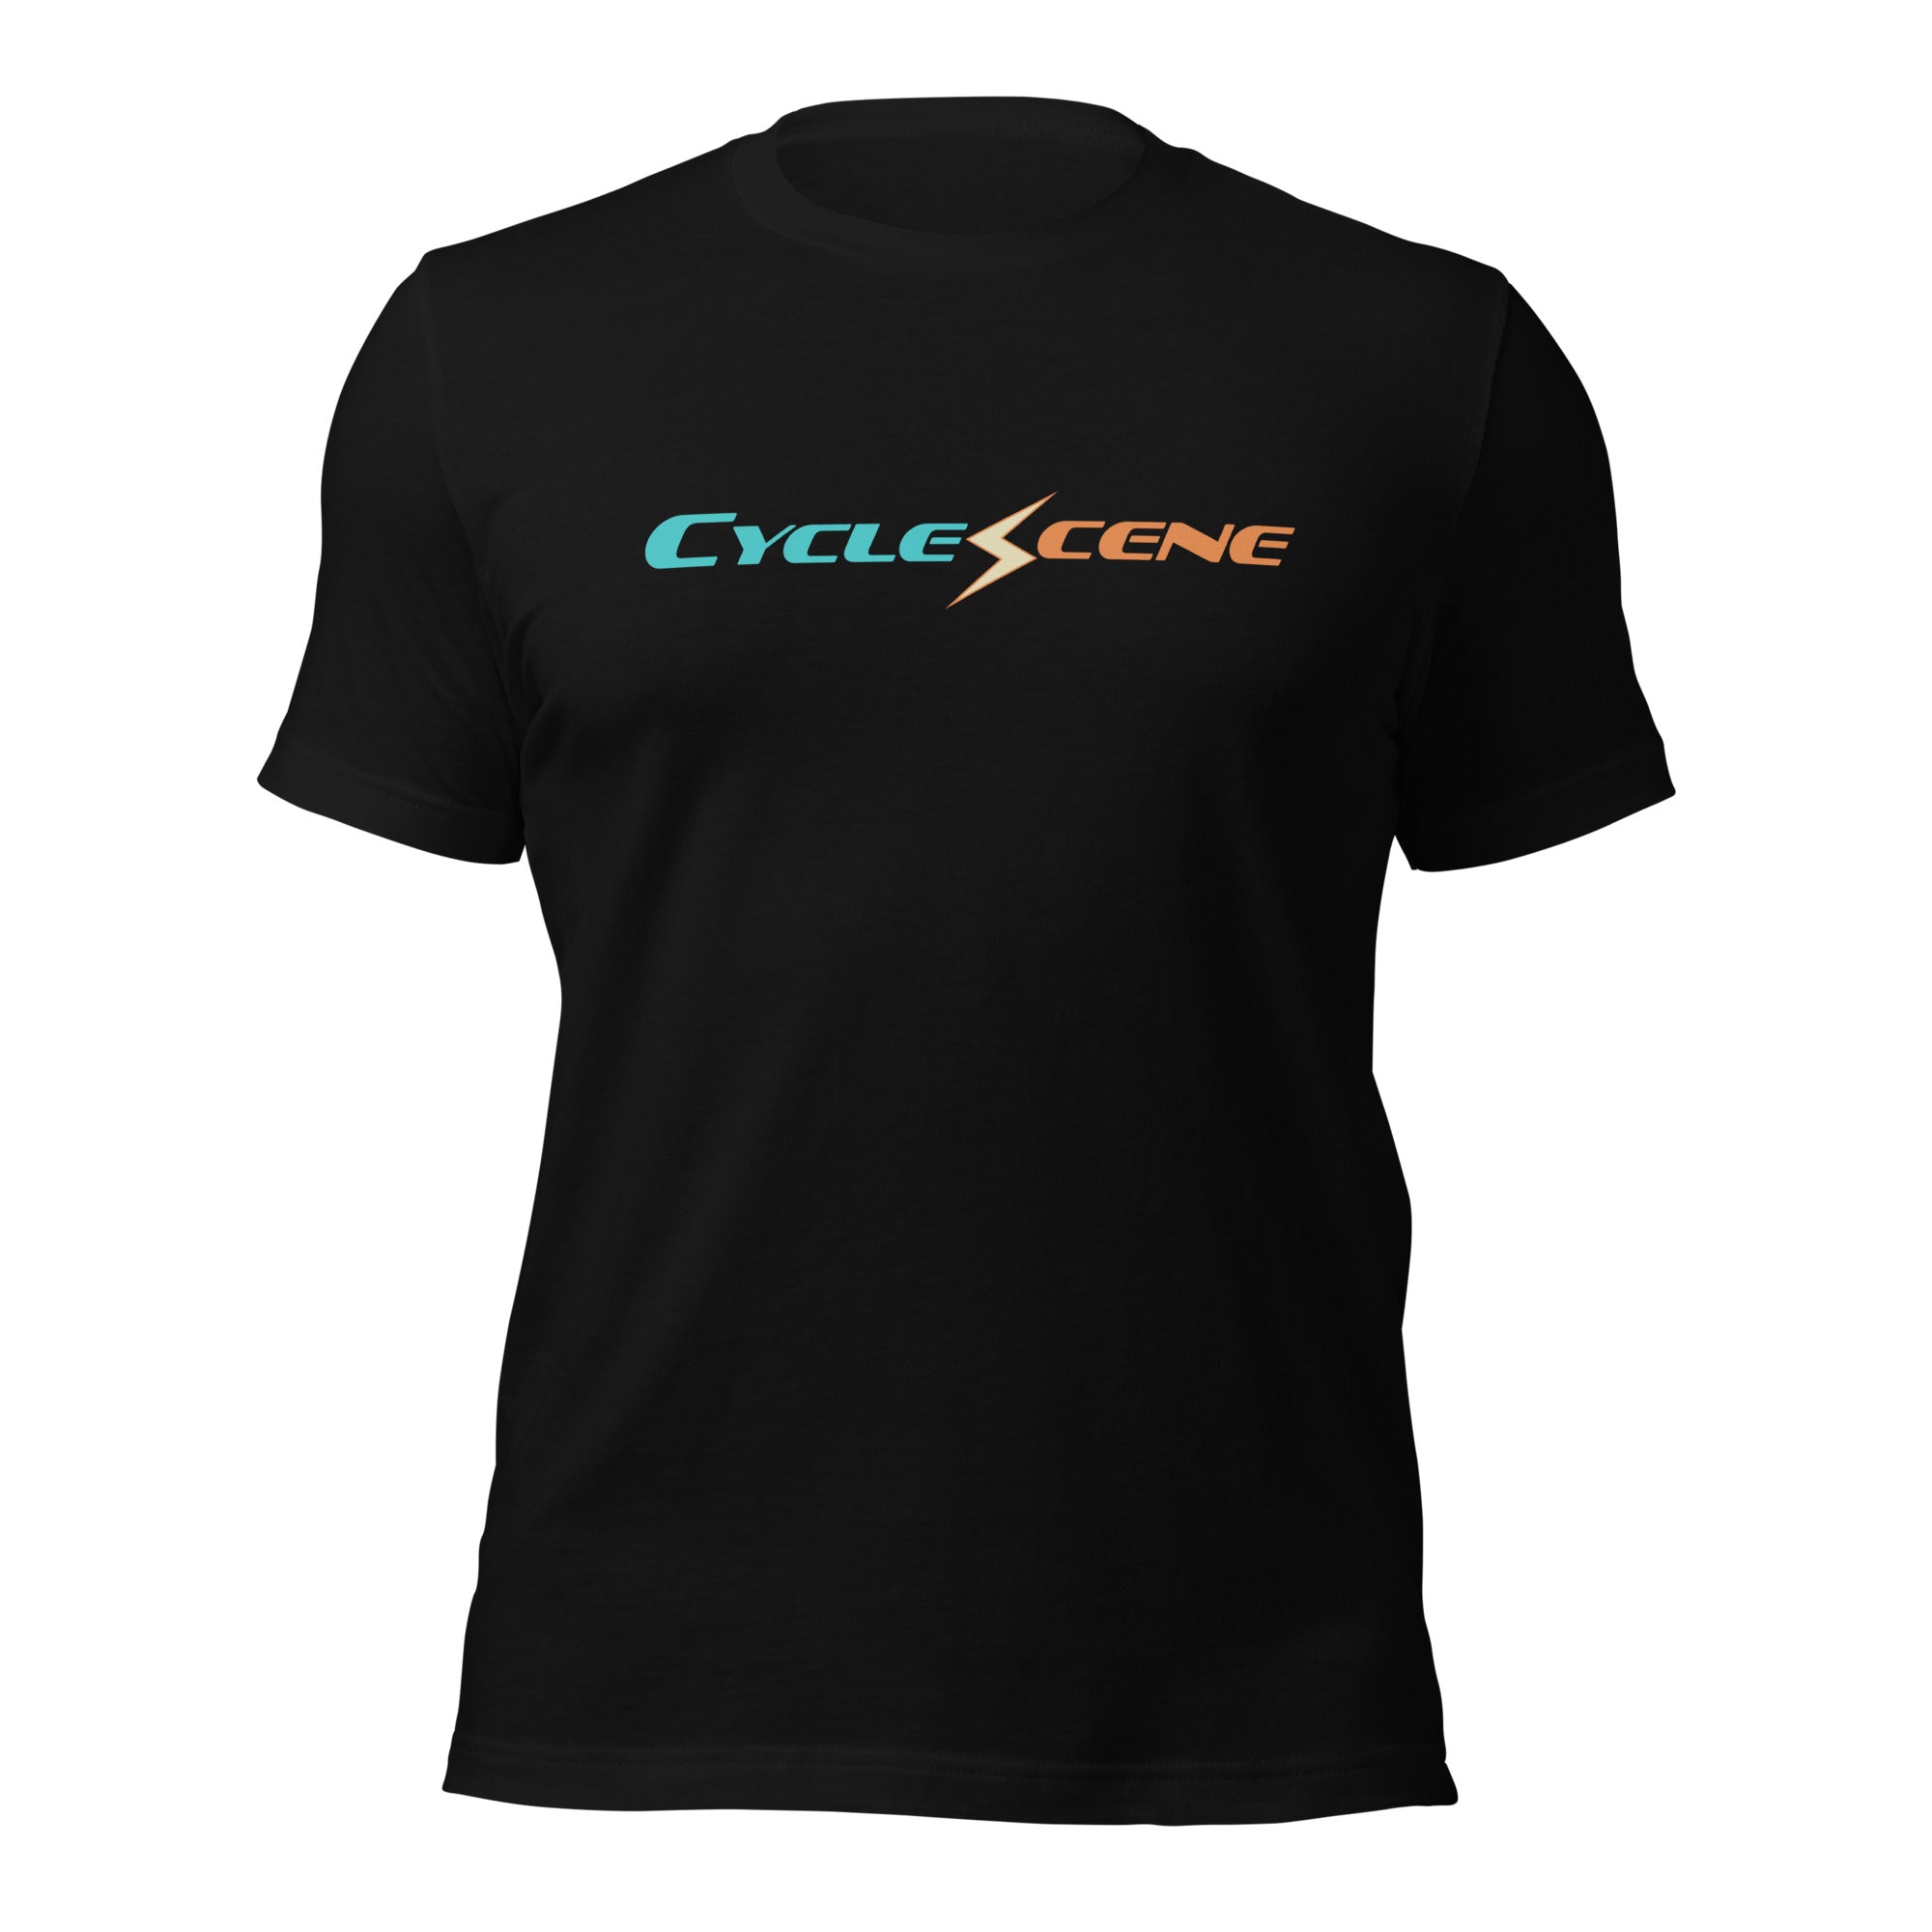 CycleScene T-shirt